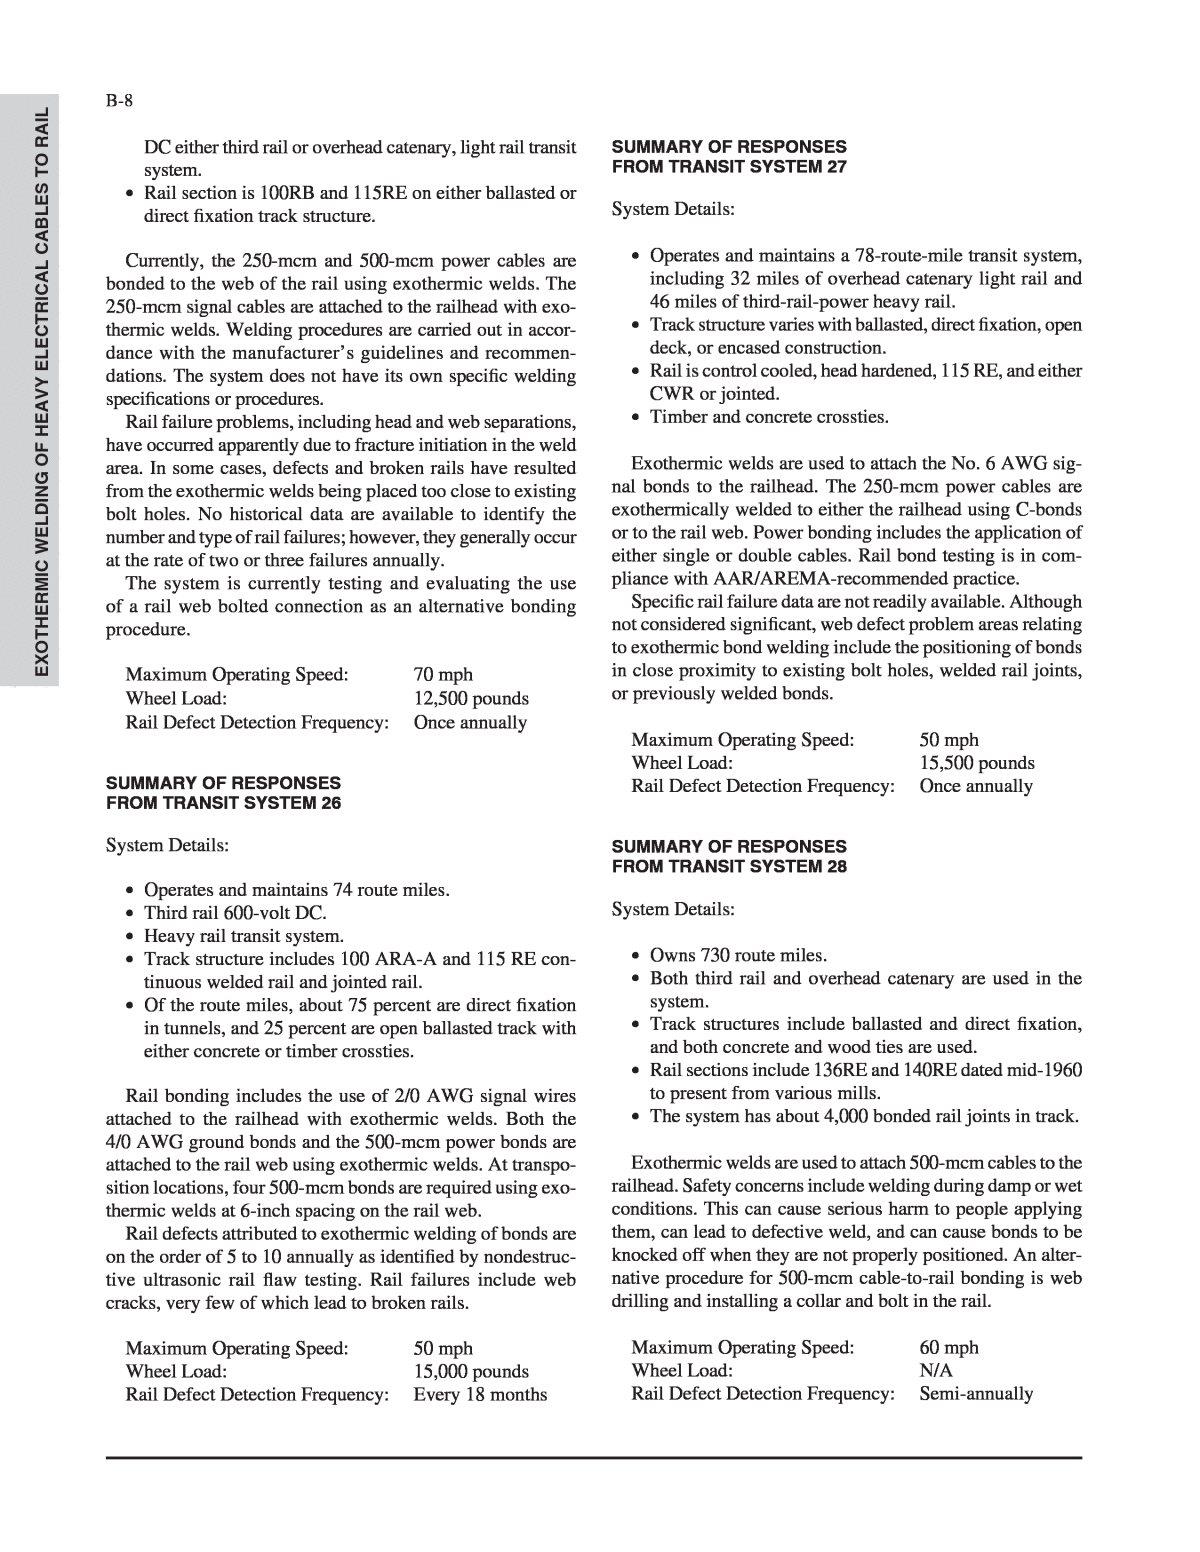 arema manual for railway engineering